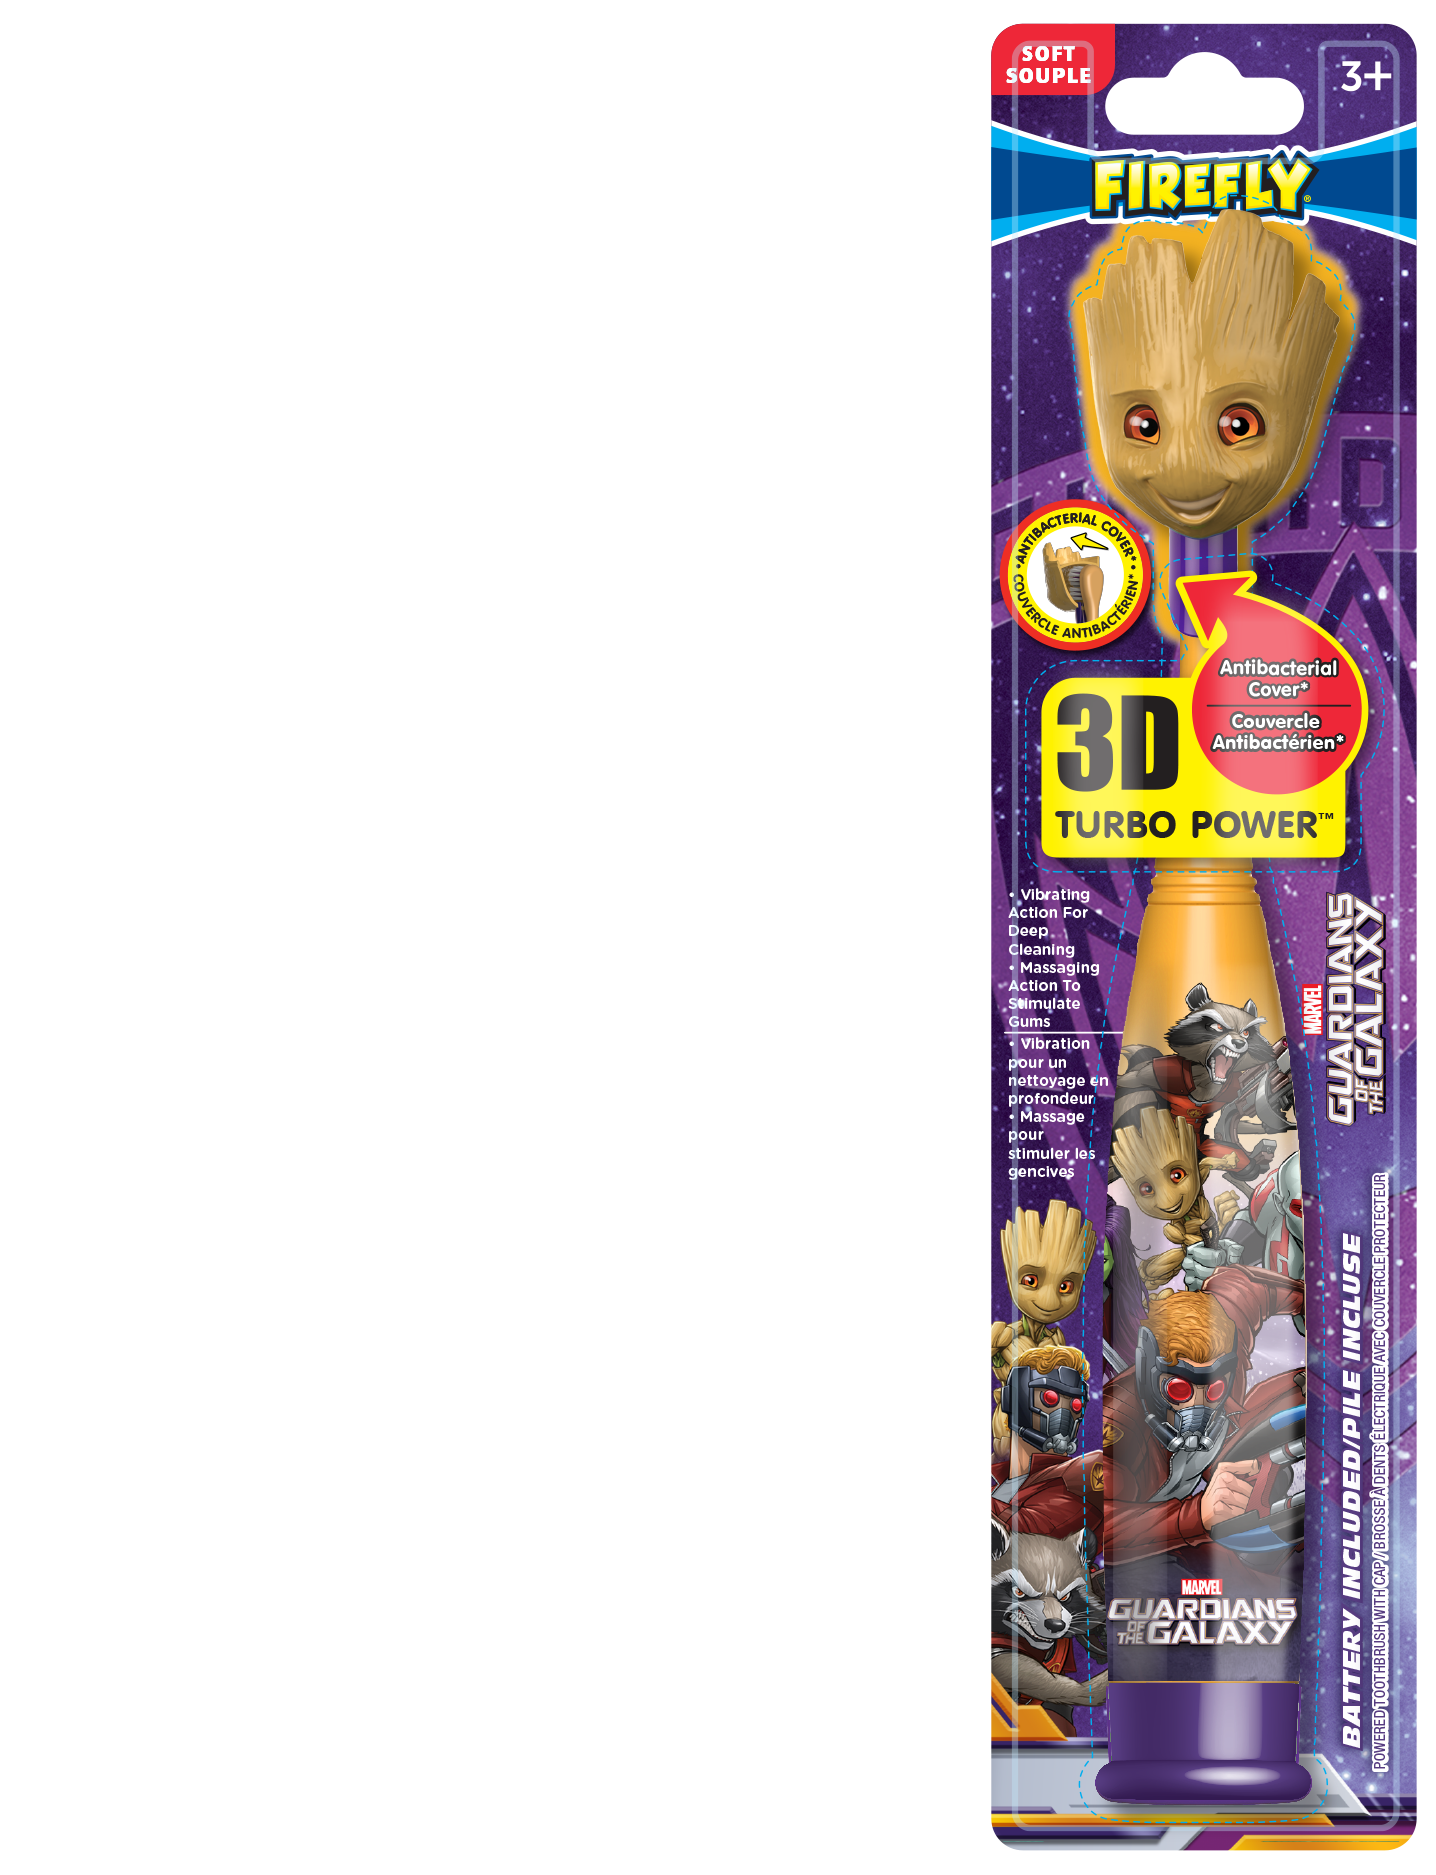 Firefly Avenger Infinity Turbo Toothbrush - image 2 of 3